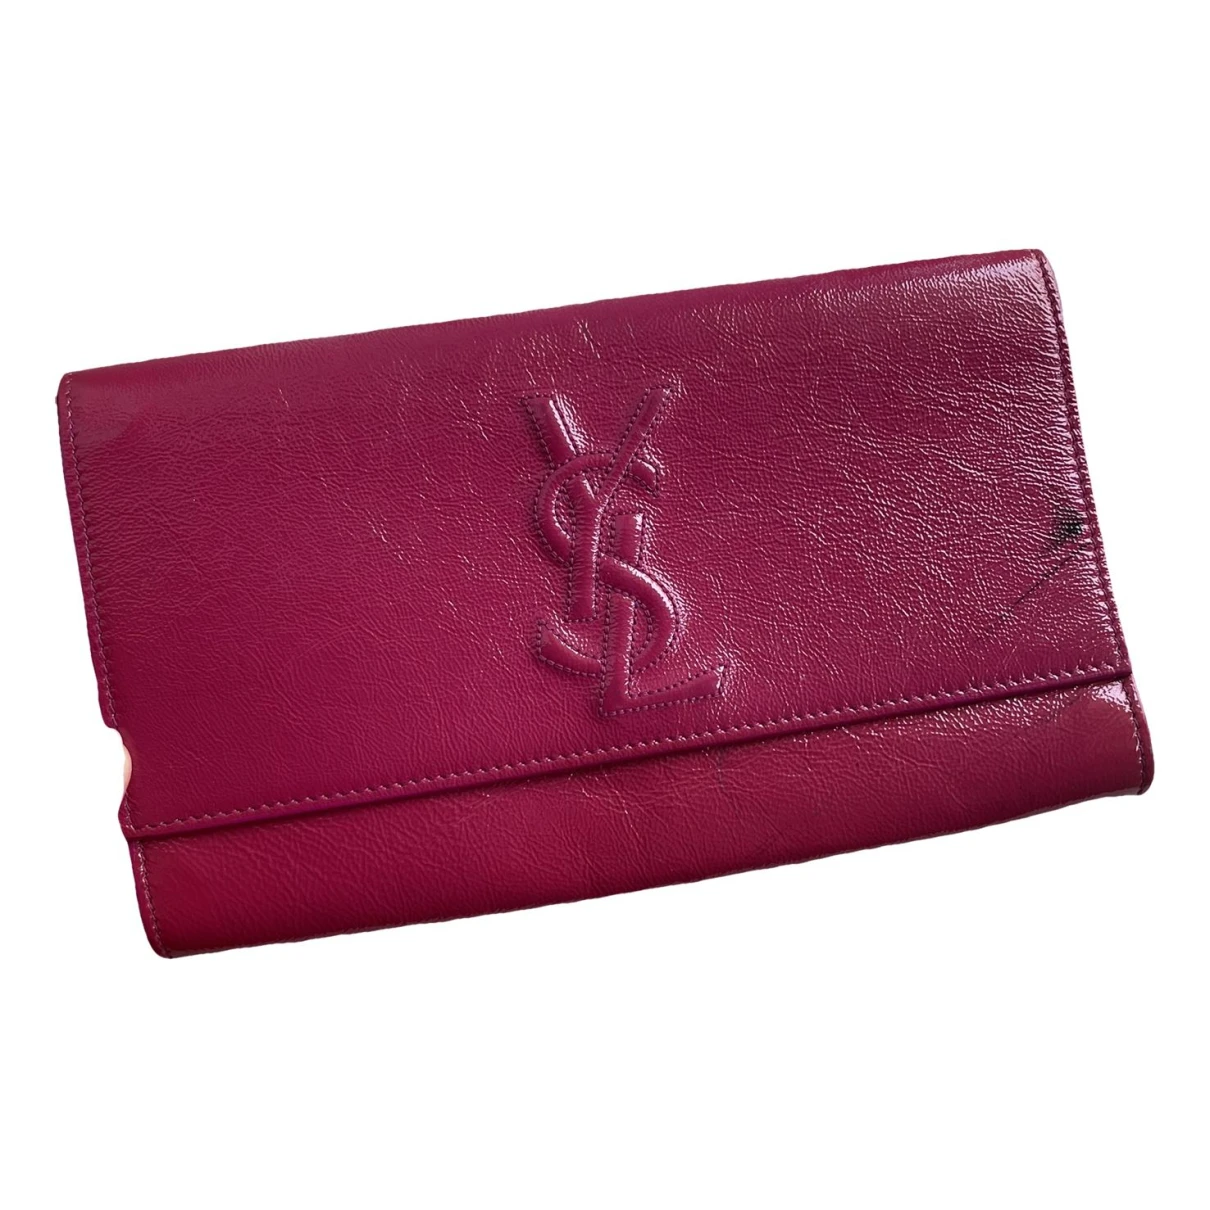 Pre-owned Saint Laurent Belle De Jour Patent Leather Clutch Bag In Pink